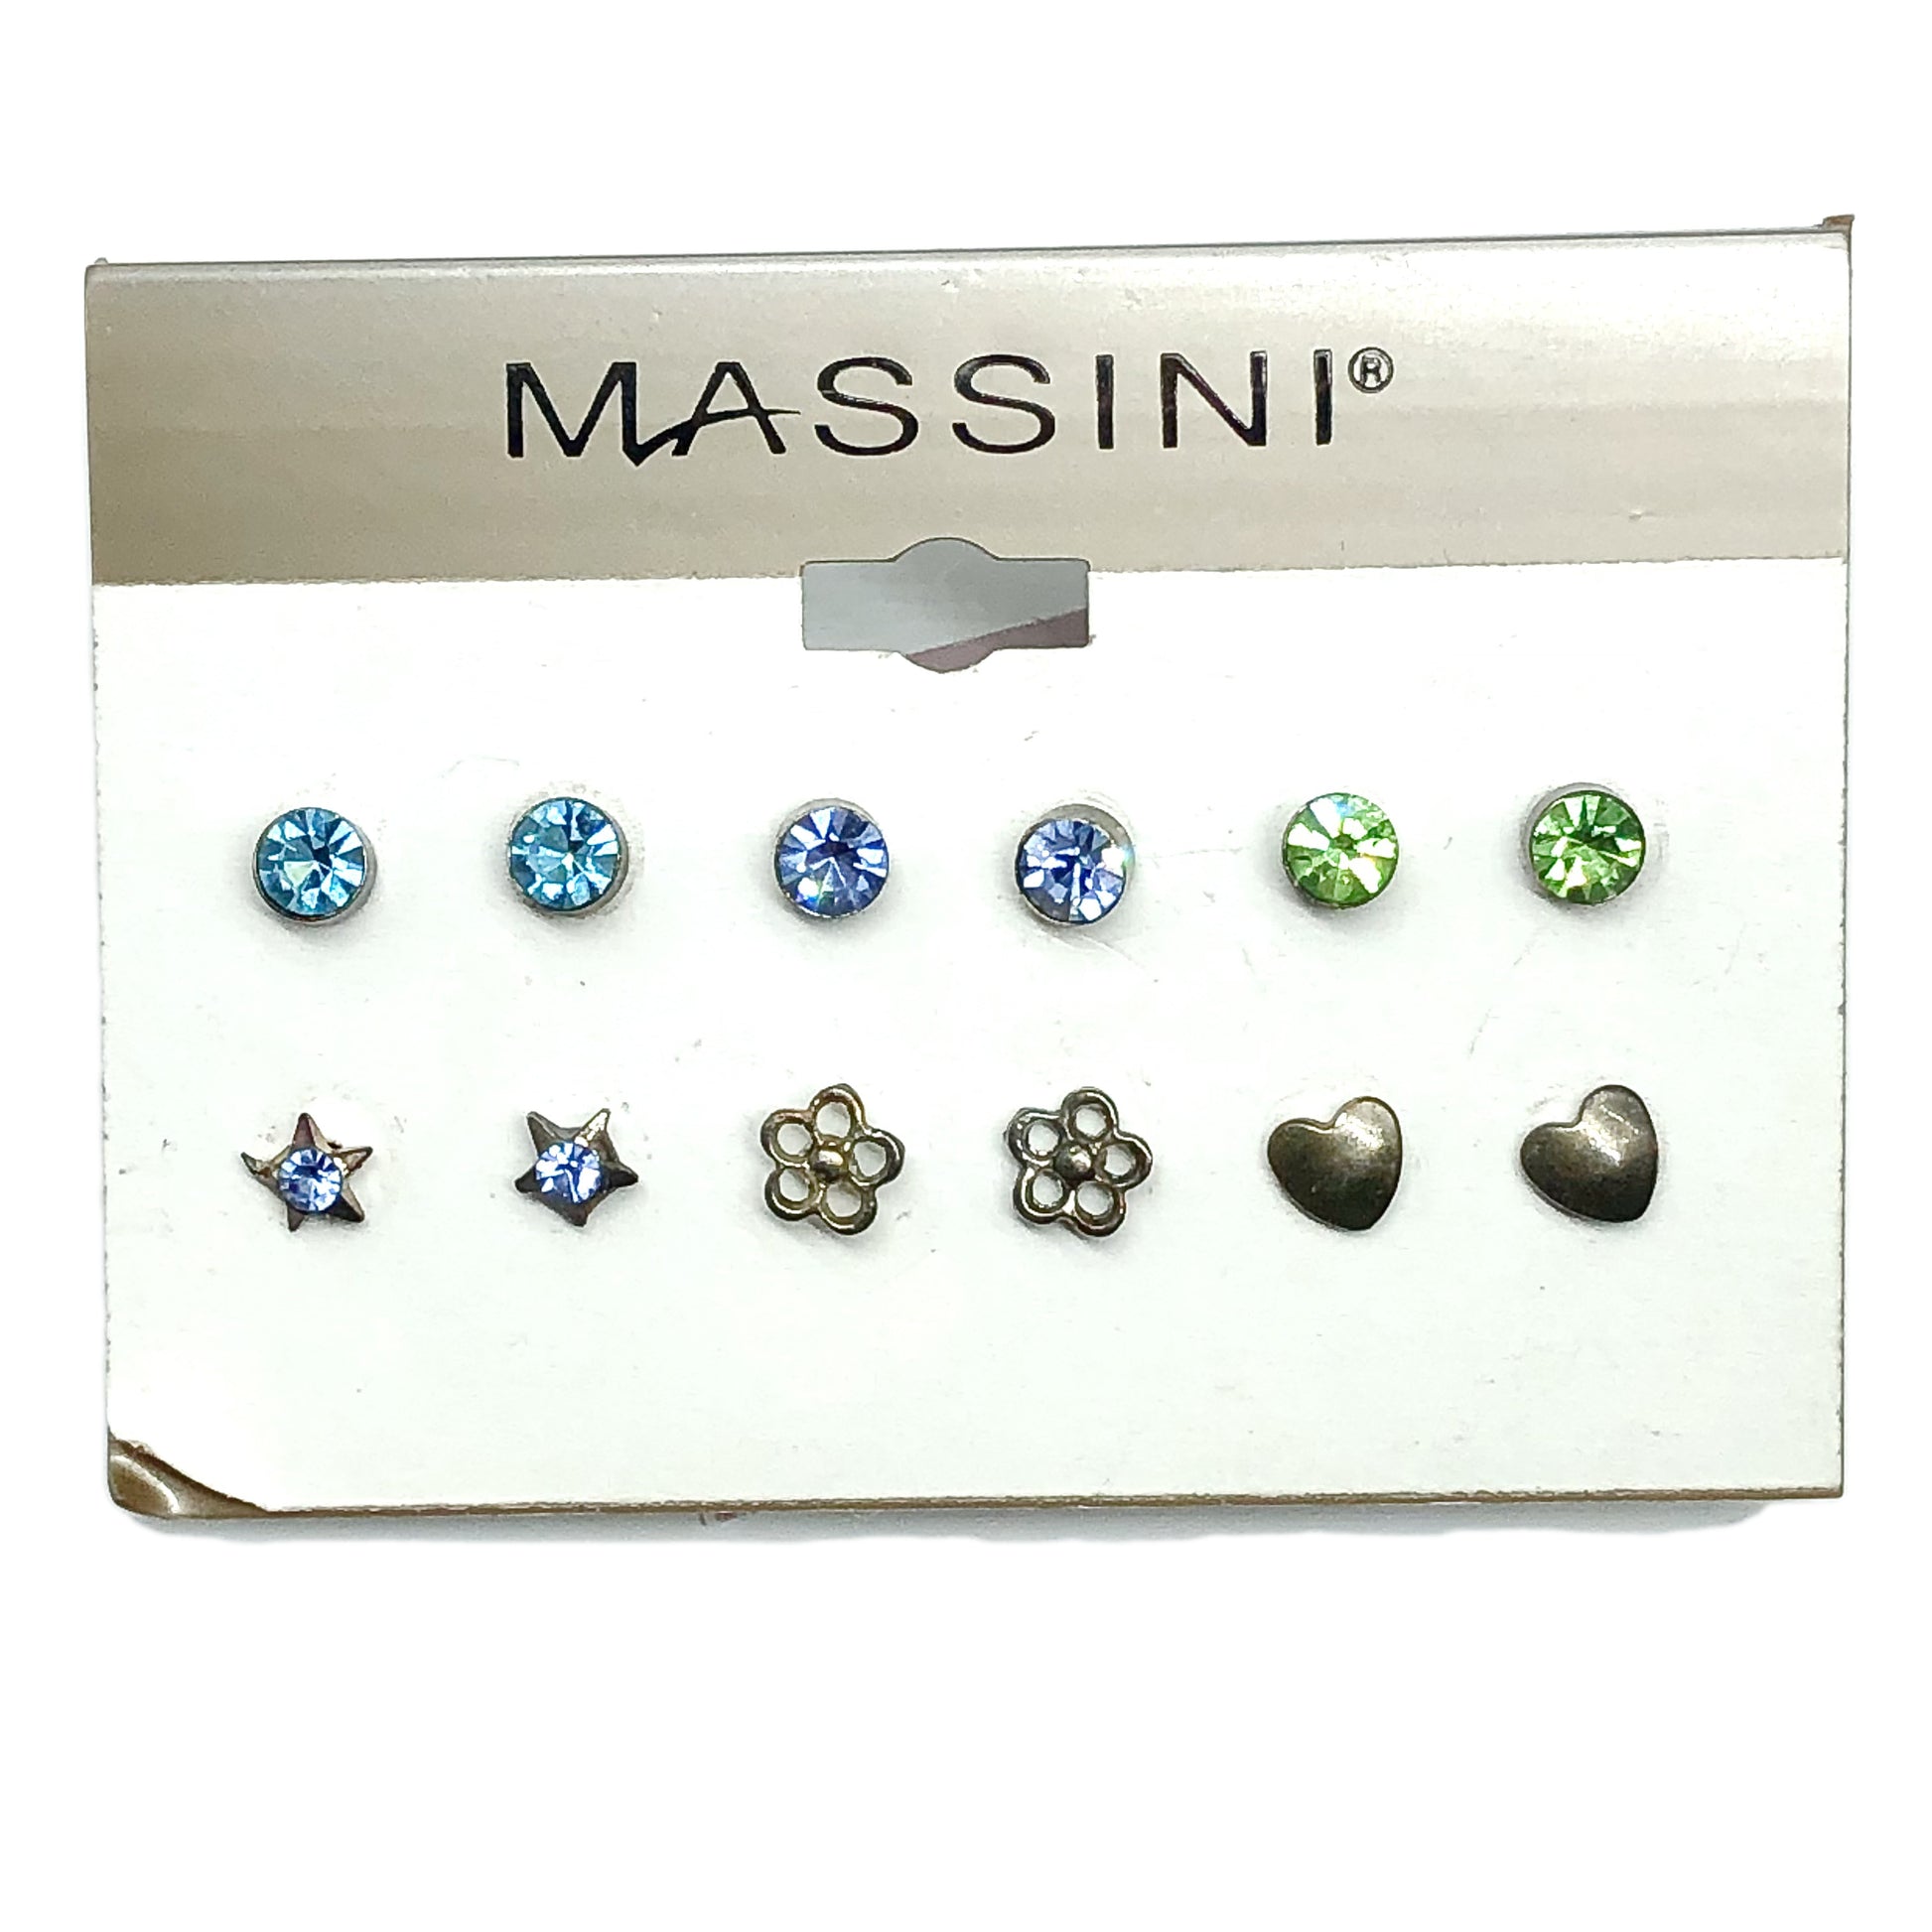 Jewelry | Earrings 6 Assorted Bronzed Classic Crystal Stud Earrings  - Blingschlingers USA Overstock Jewelry